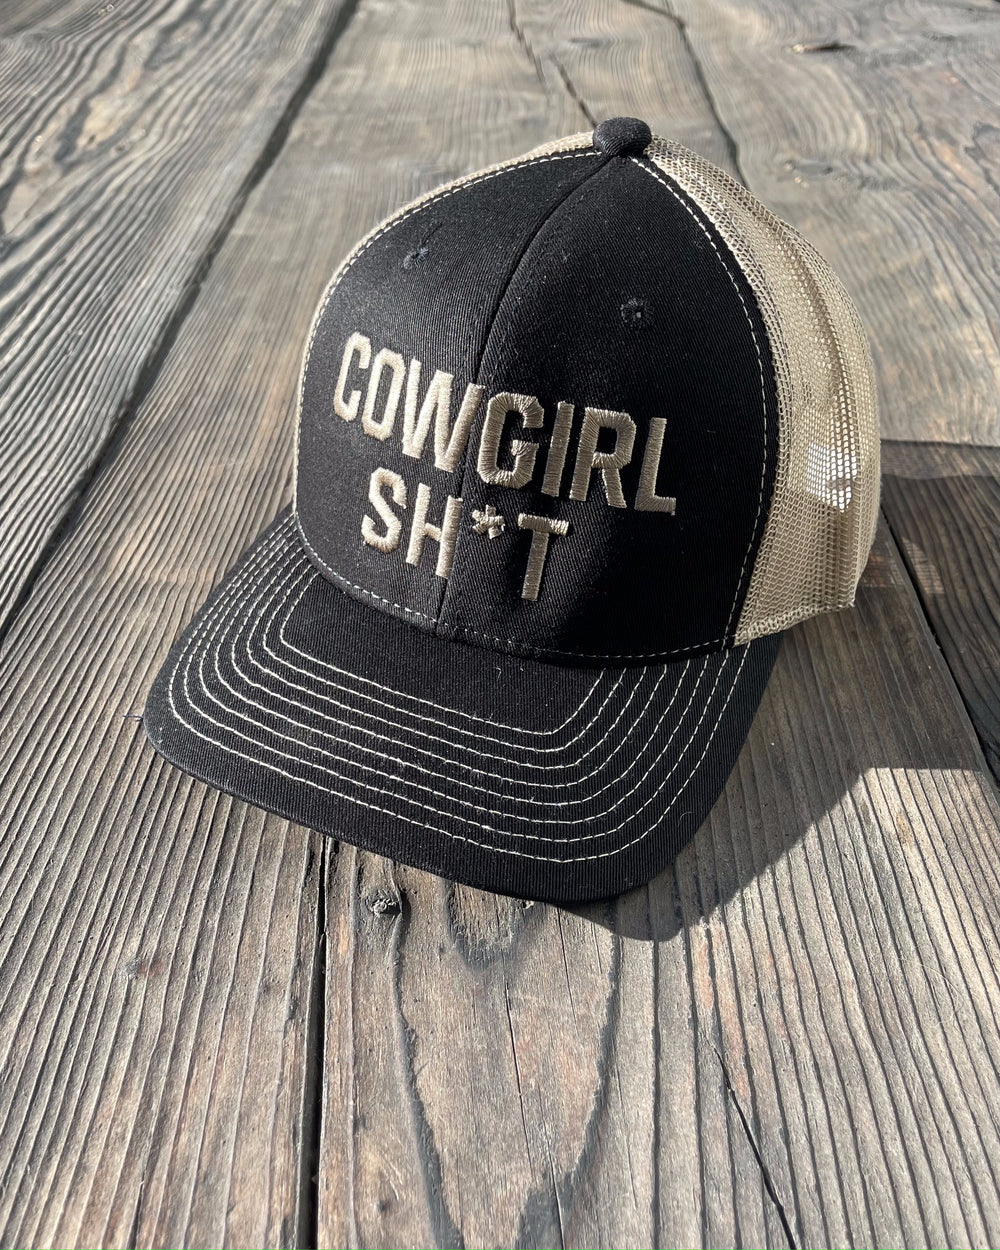 Cowboy Sh!t - Cowgirl Sh*t Cap